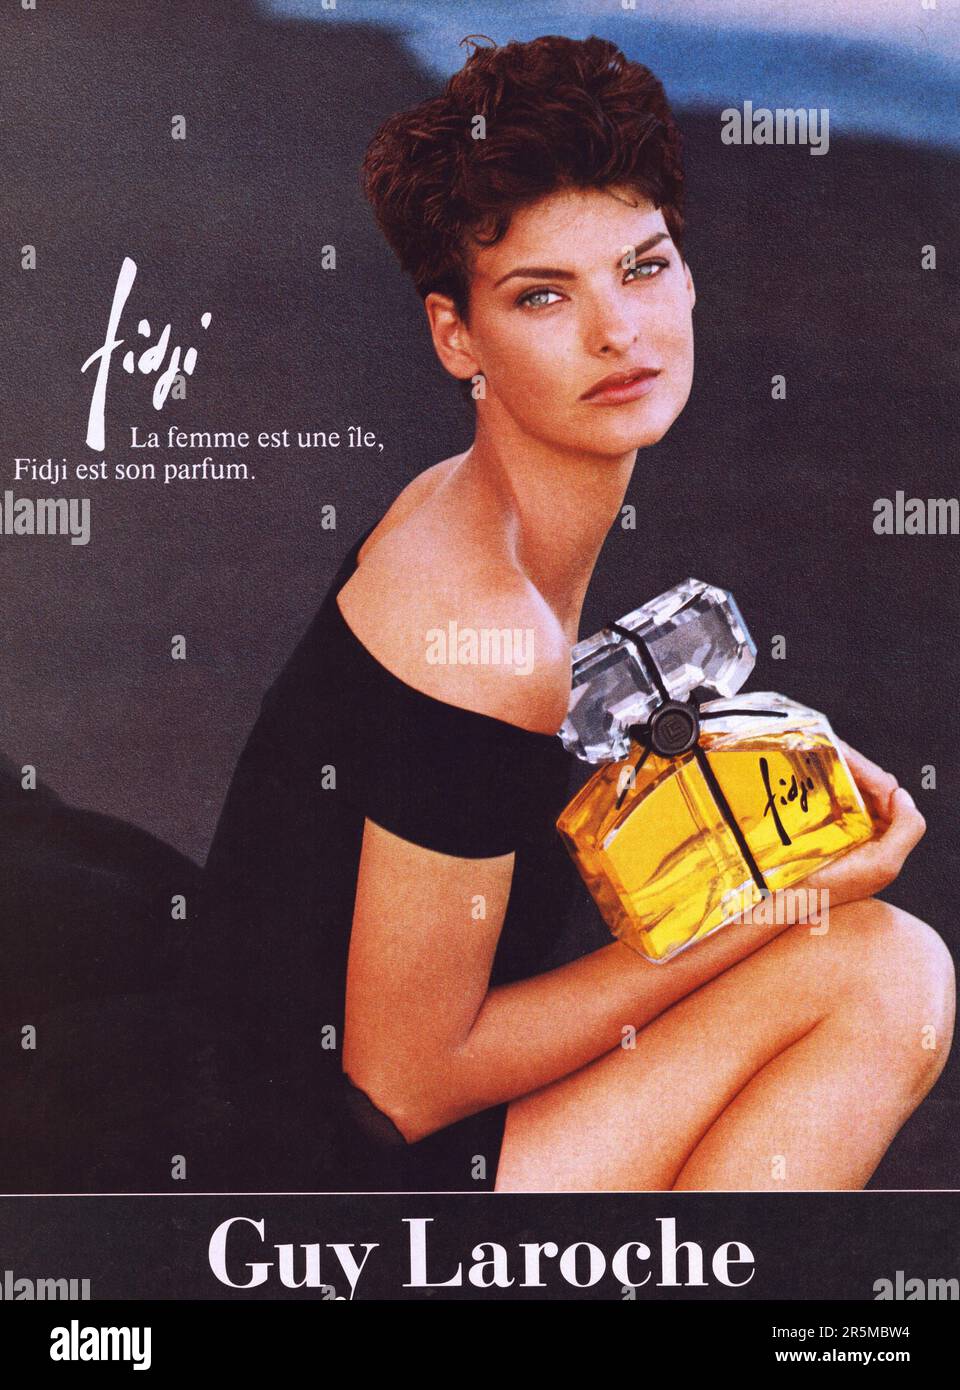 Guy Laroche Fidgi perfume French advertisement with Linda Evangelista Guy Laroche Fidgi advertising poster Stock Photo